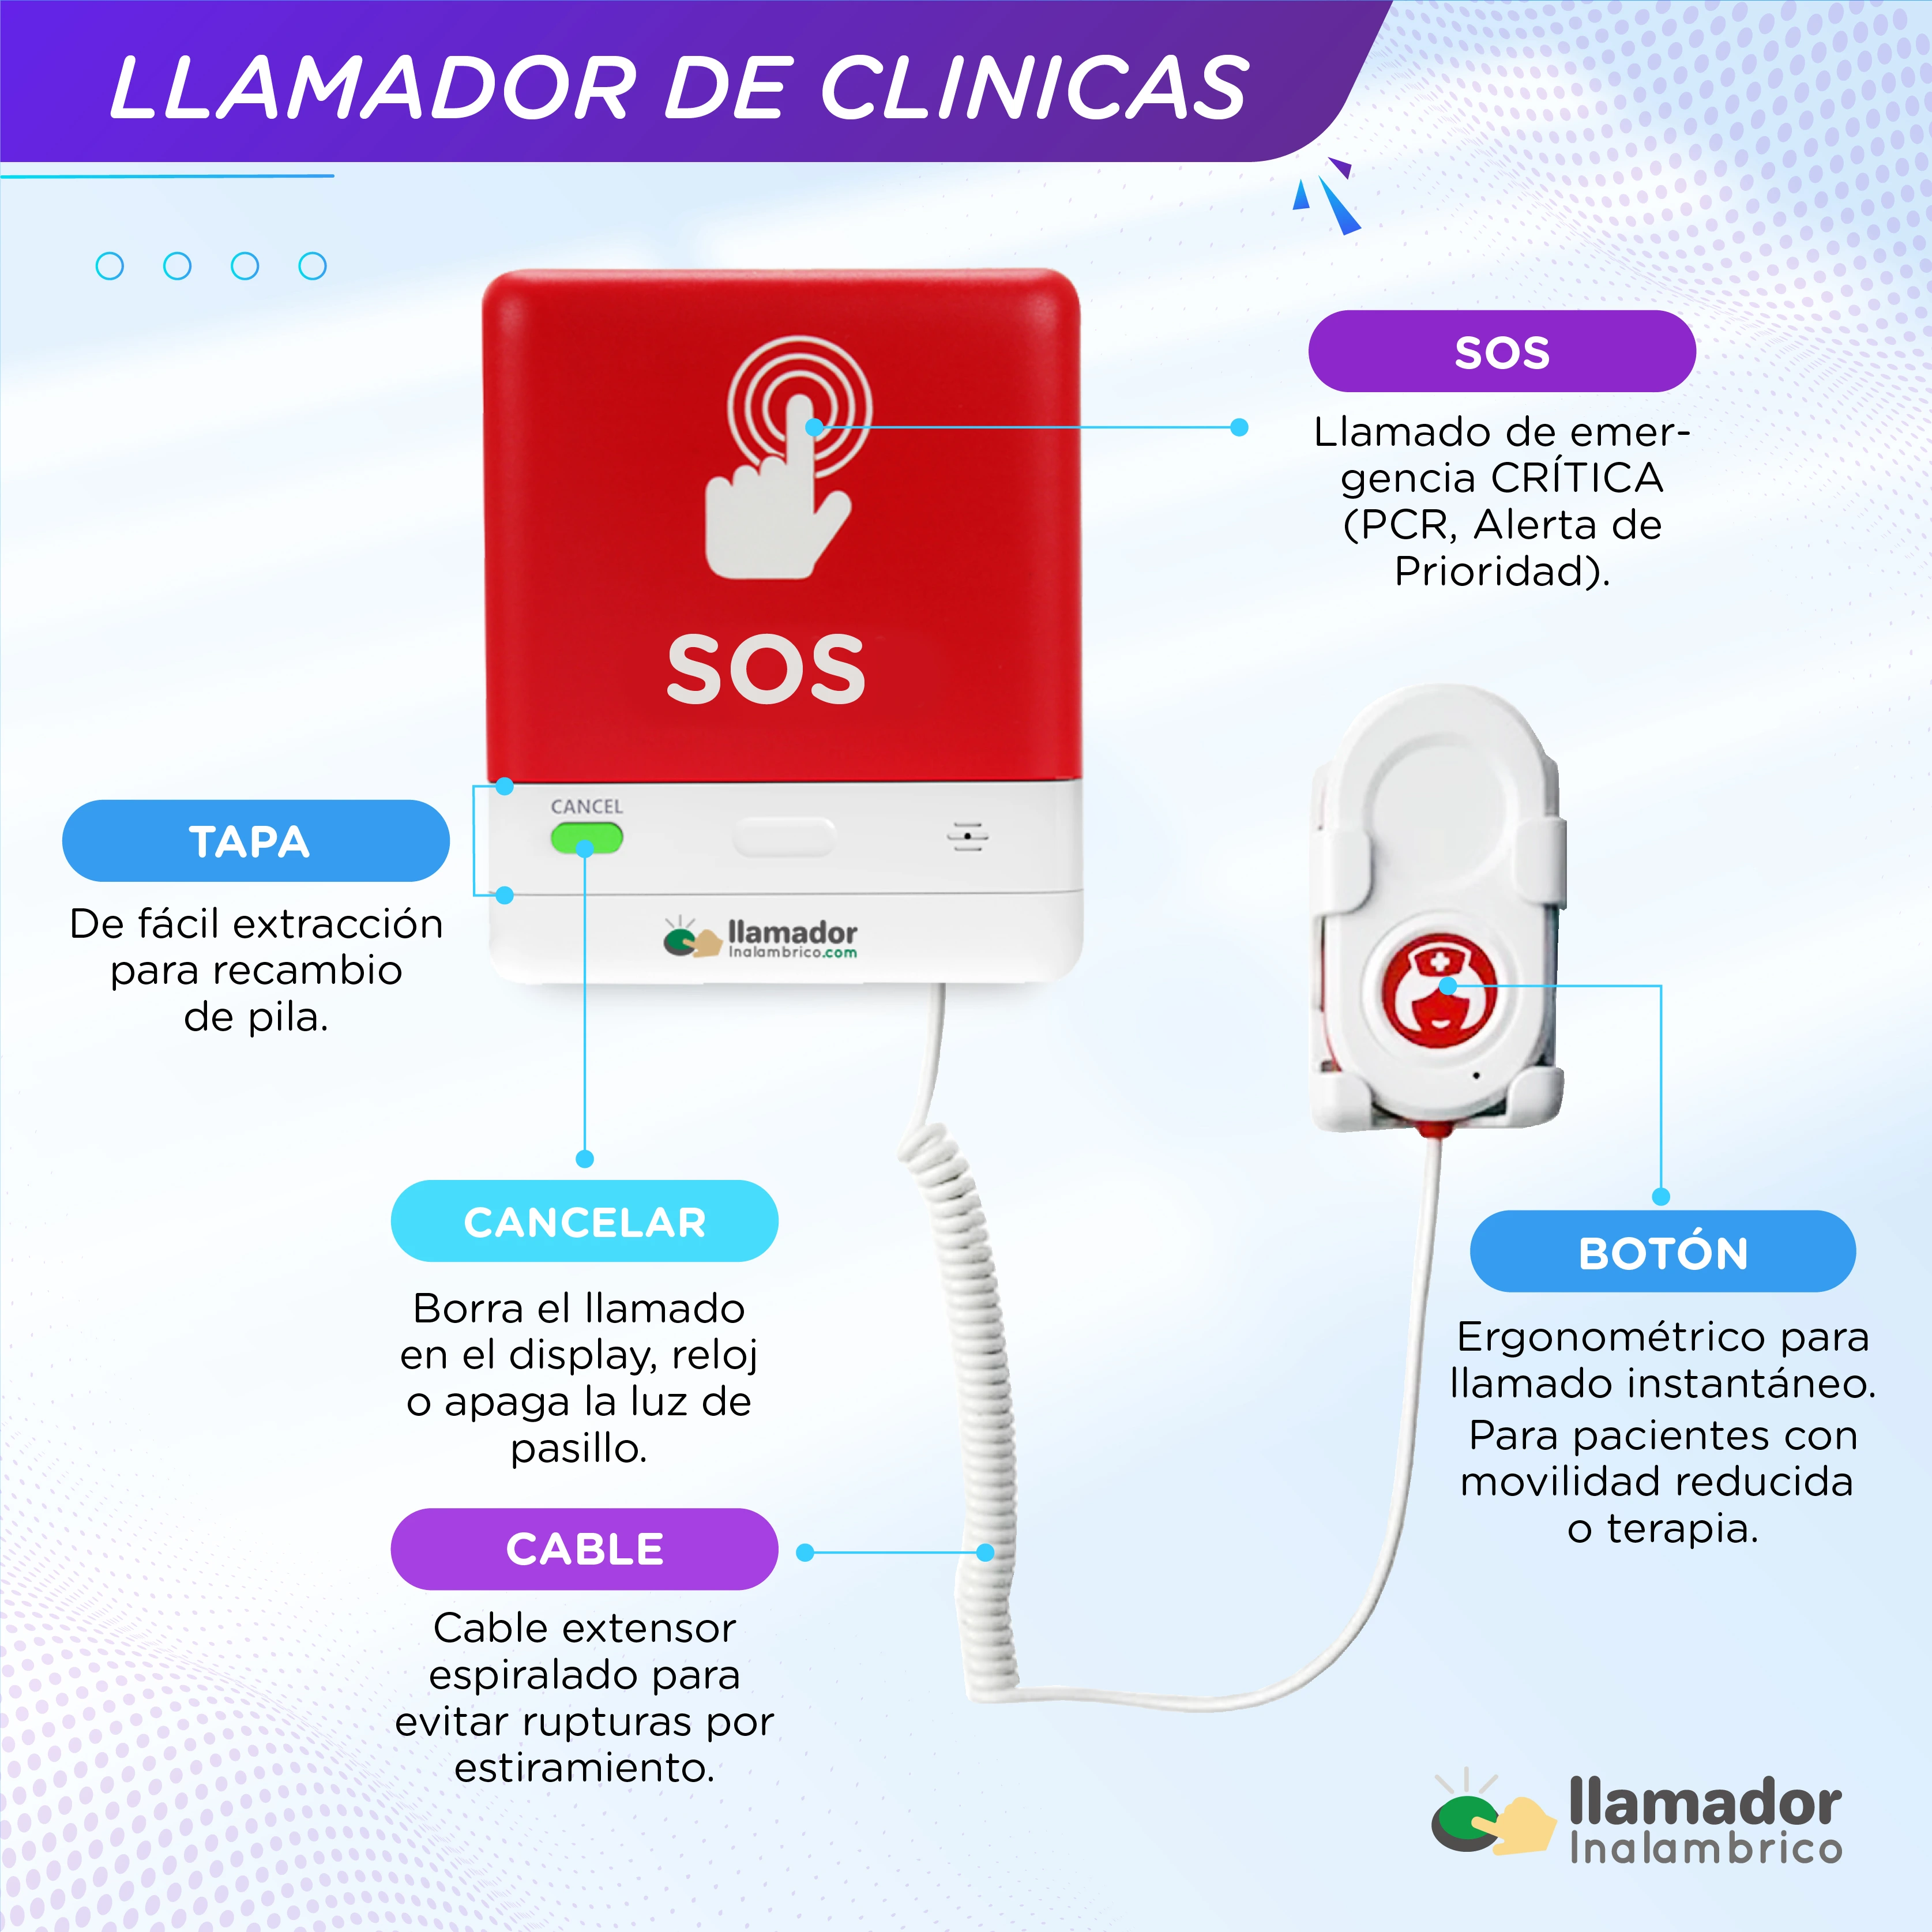 Llamador Premium Clinicas